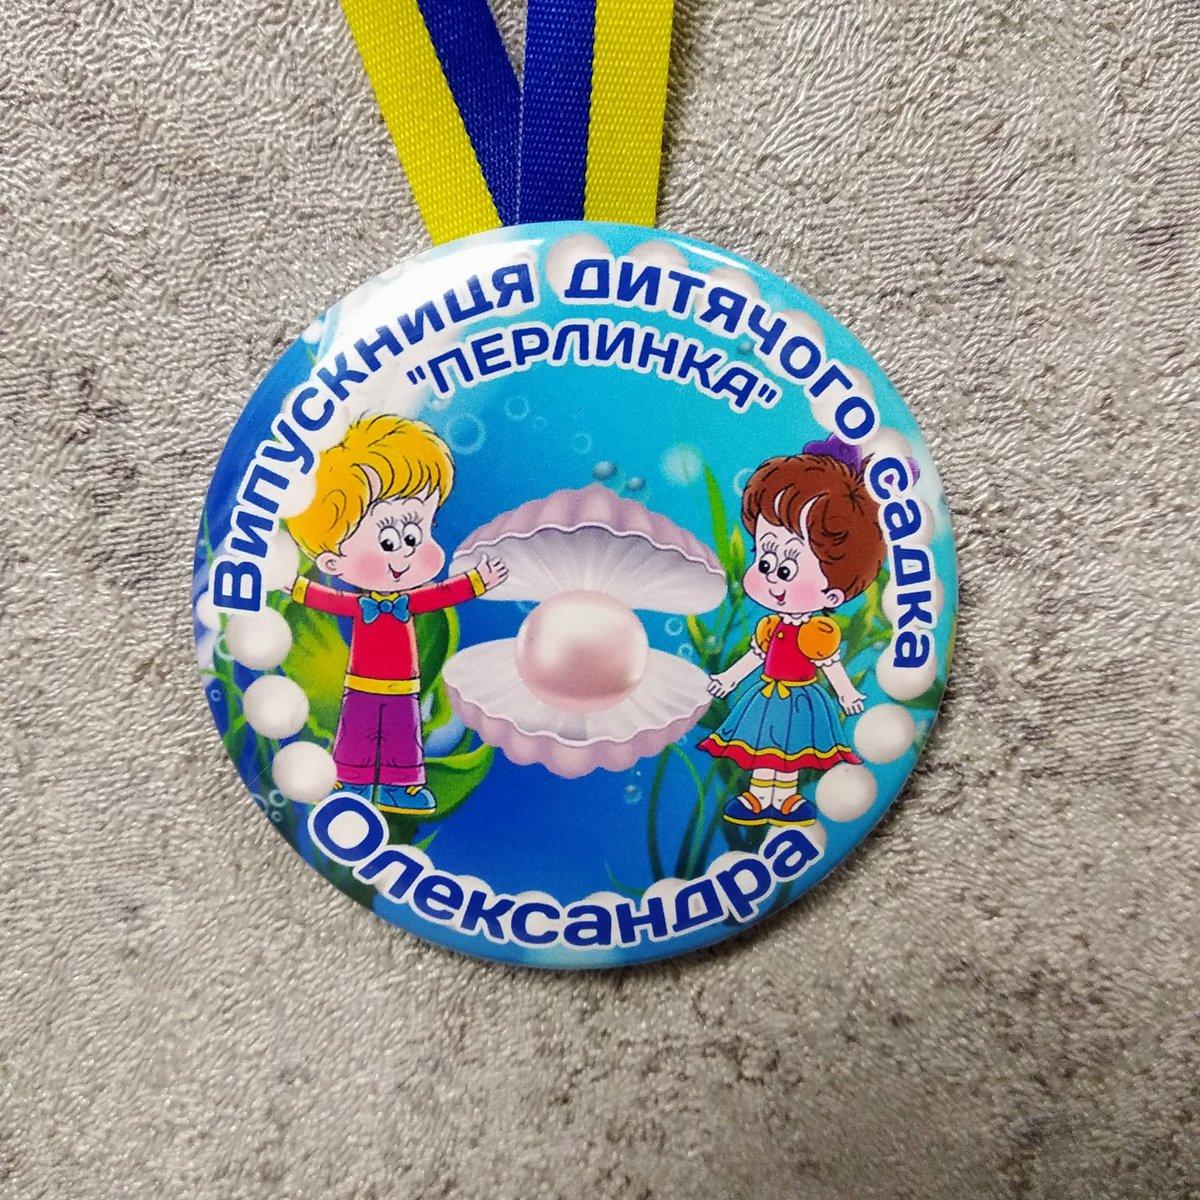 Іменна медаль випускника дитячого садка "Перлинка"